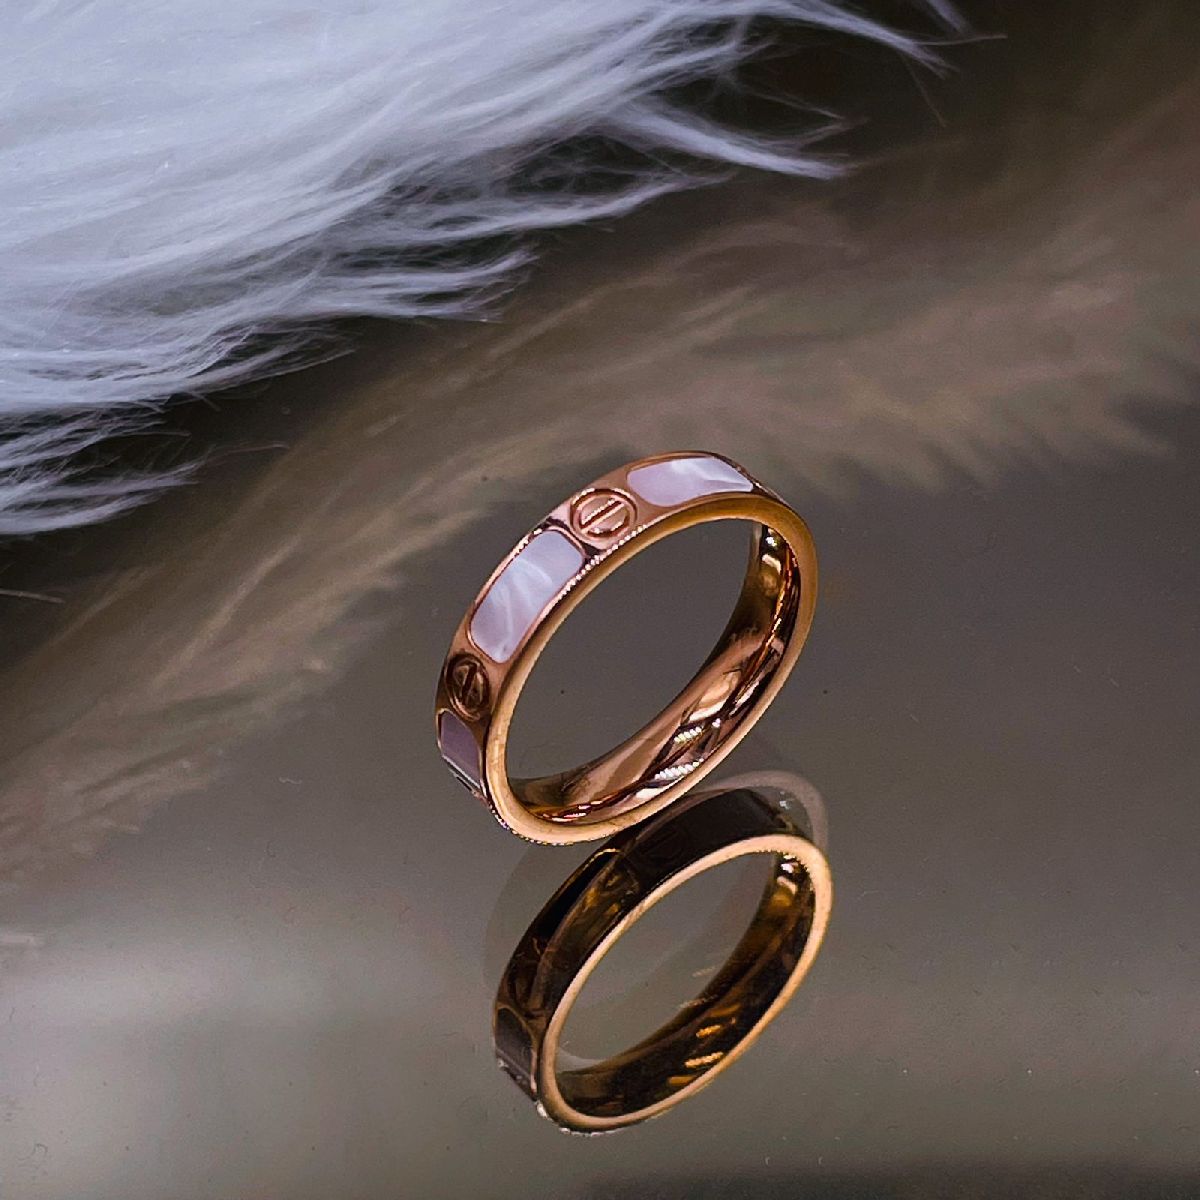 Buy Avsar 18k (750) Yellow Gold and Diamond Ring for Women at Amazon.in